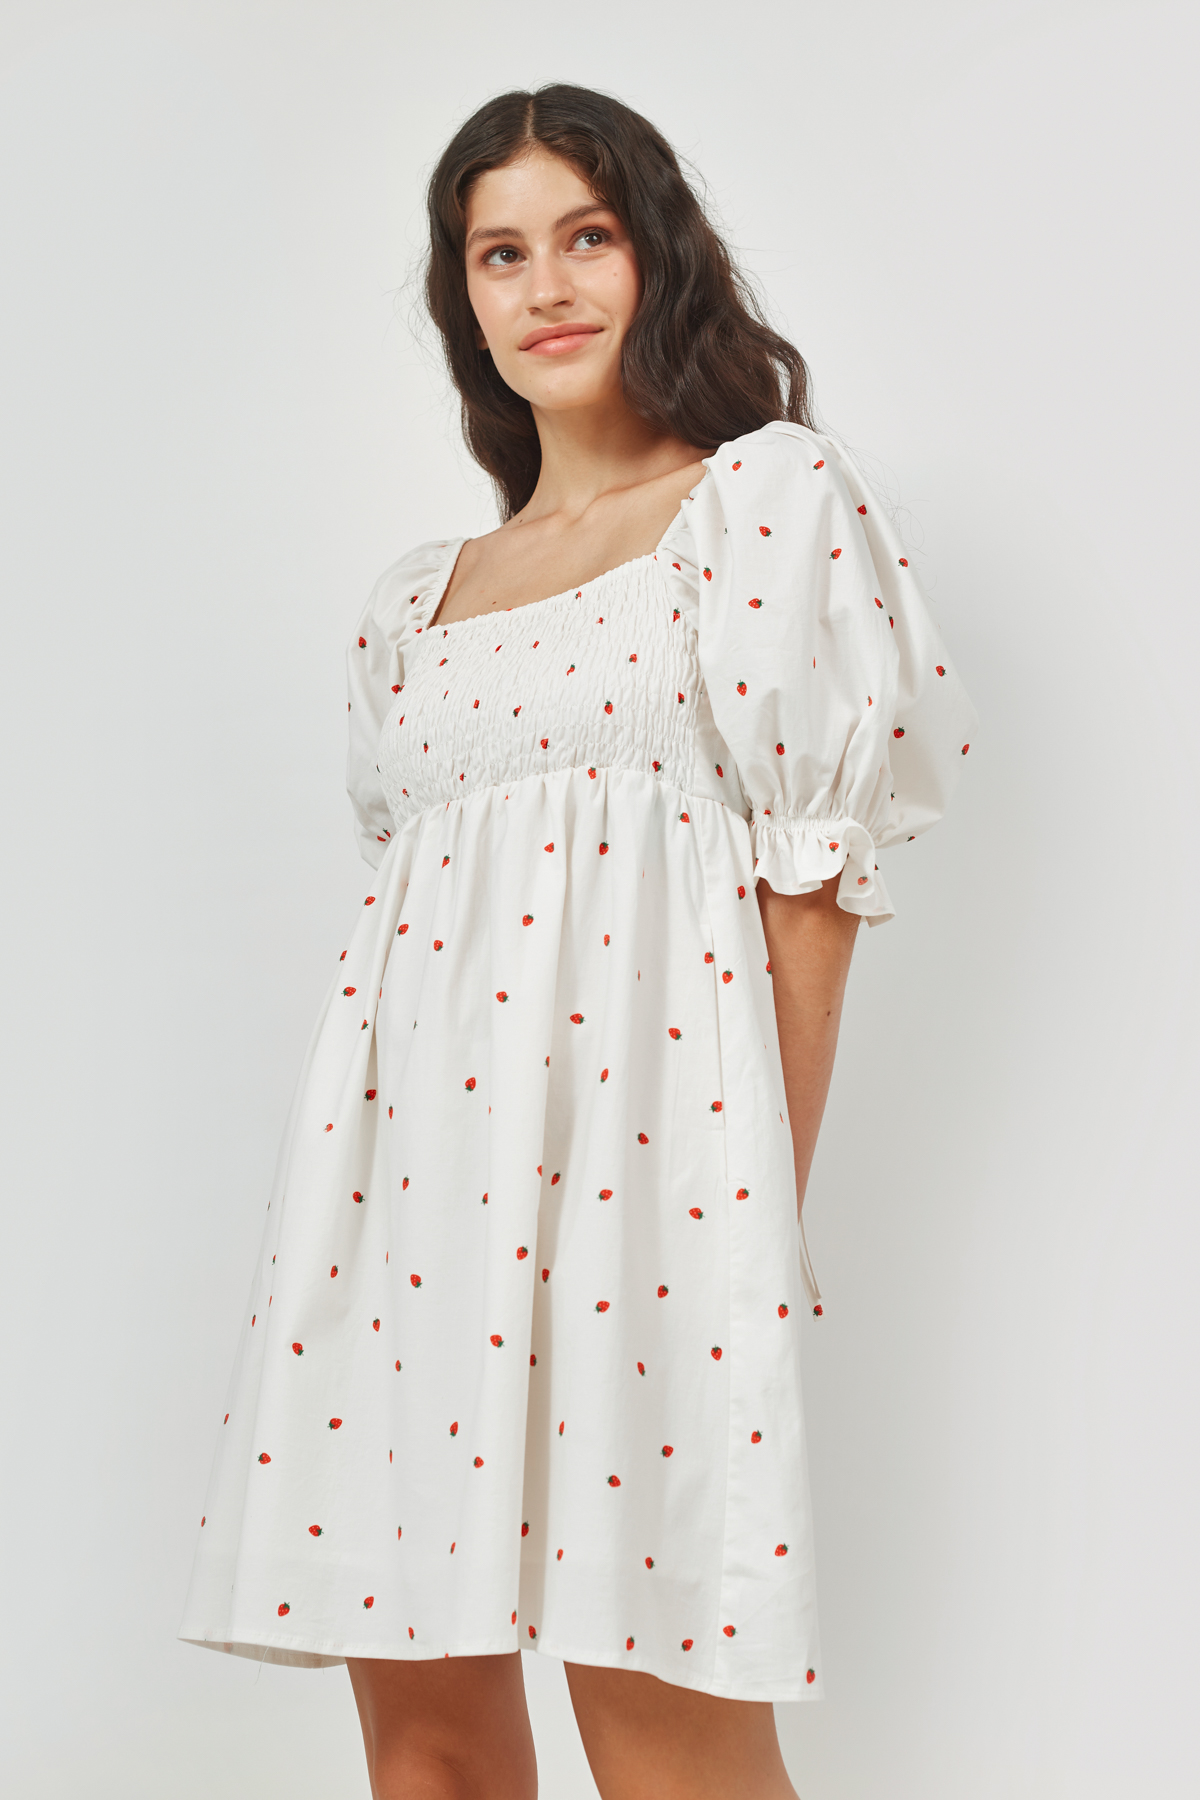 Short dress in strawberry print, photo 2